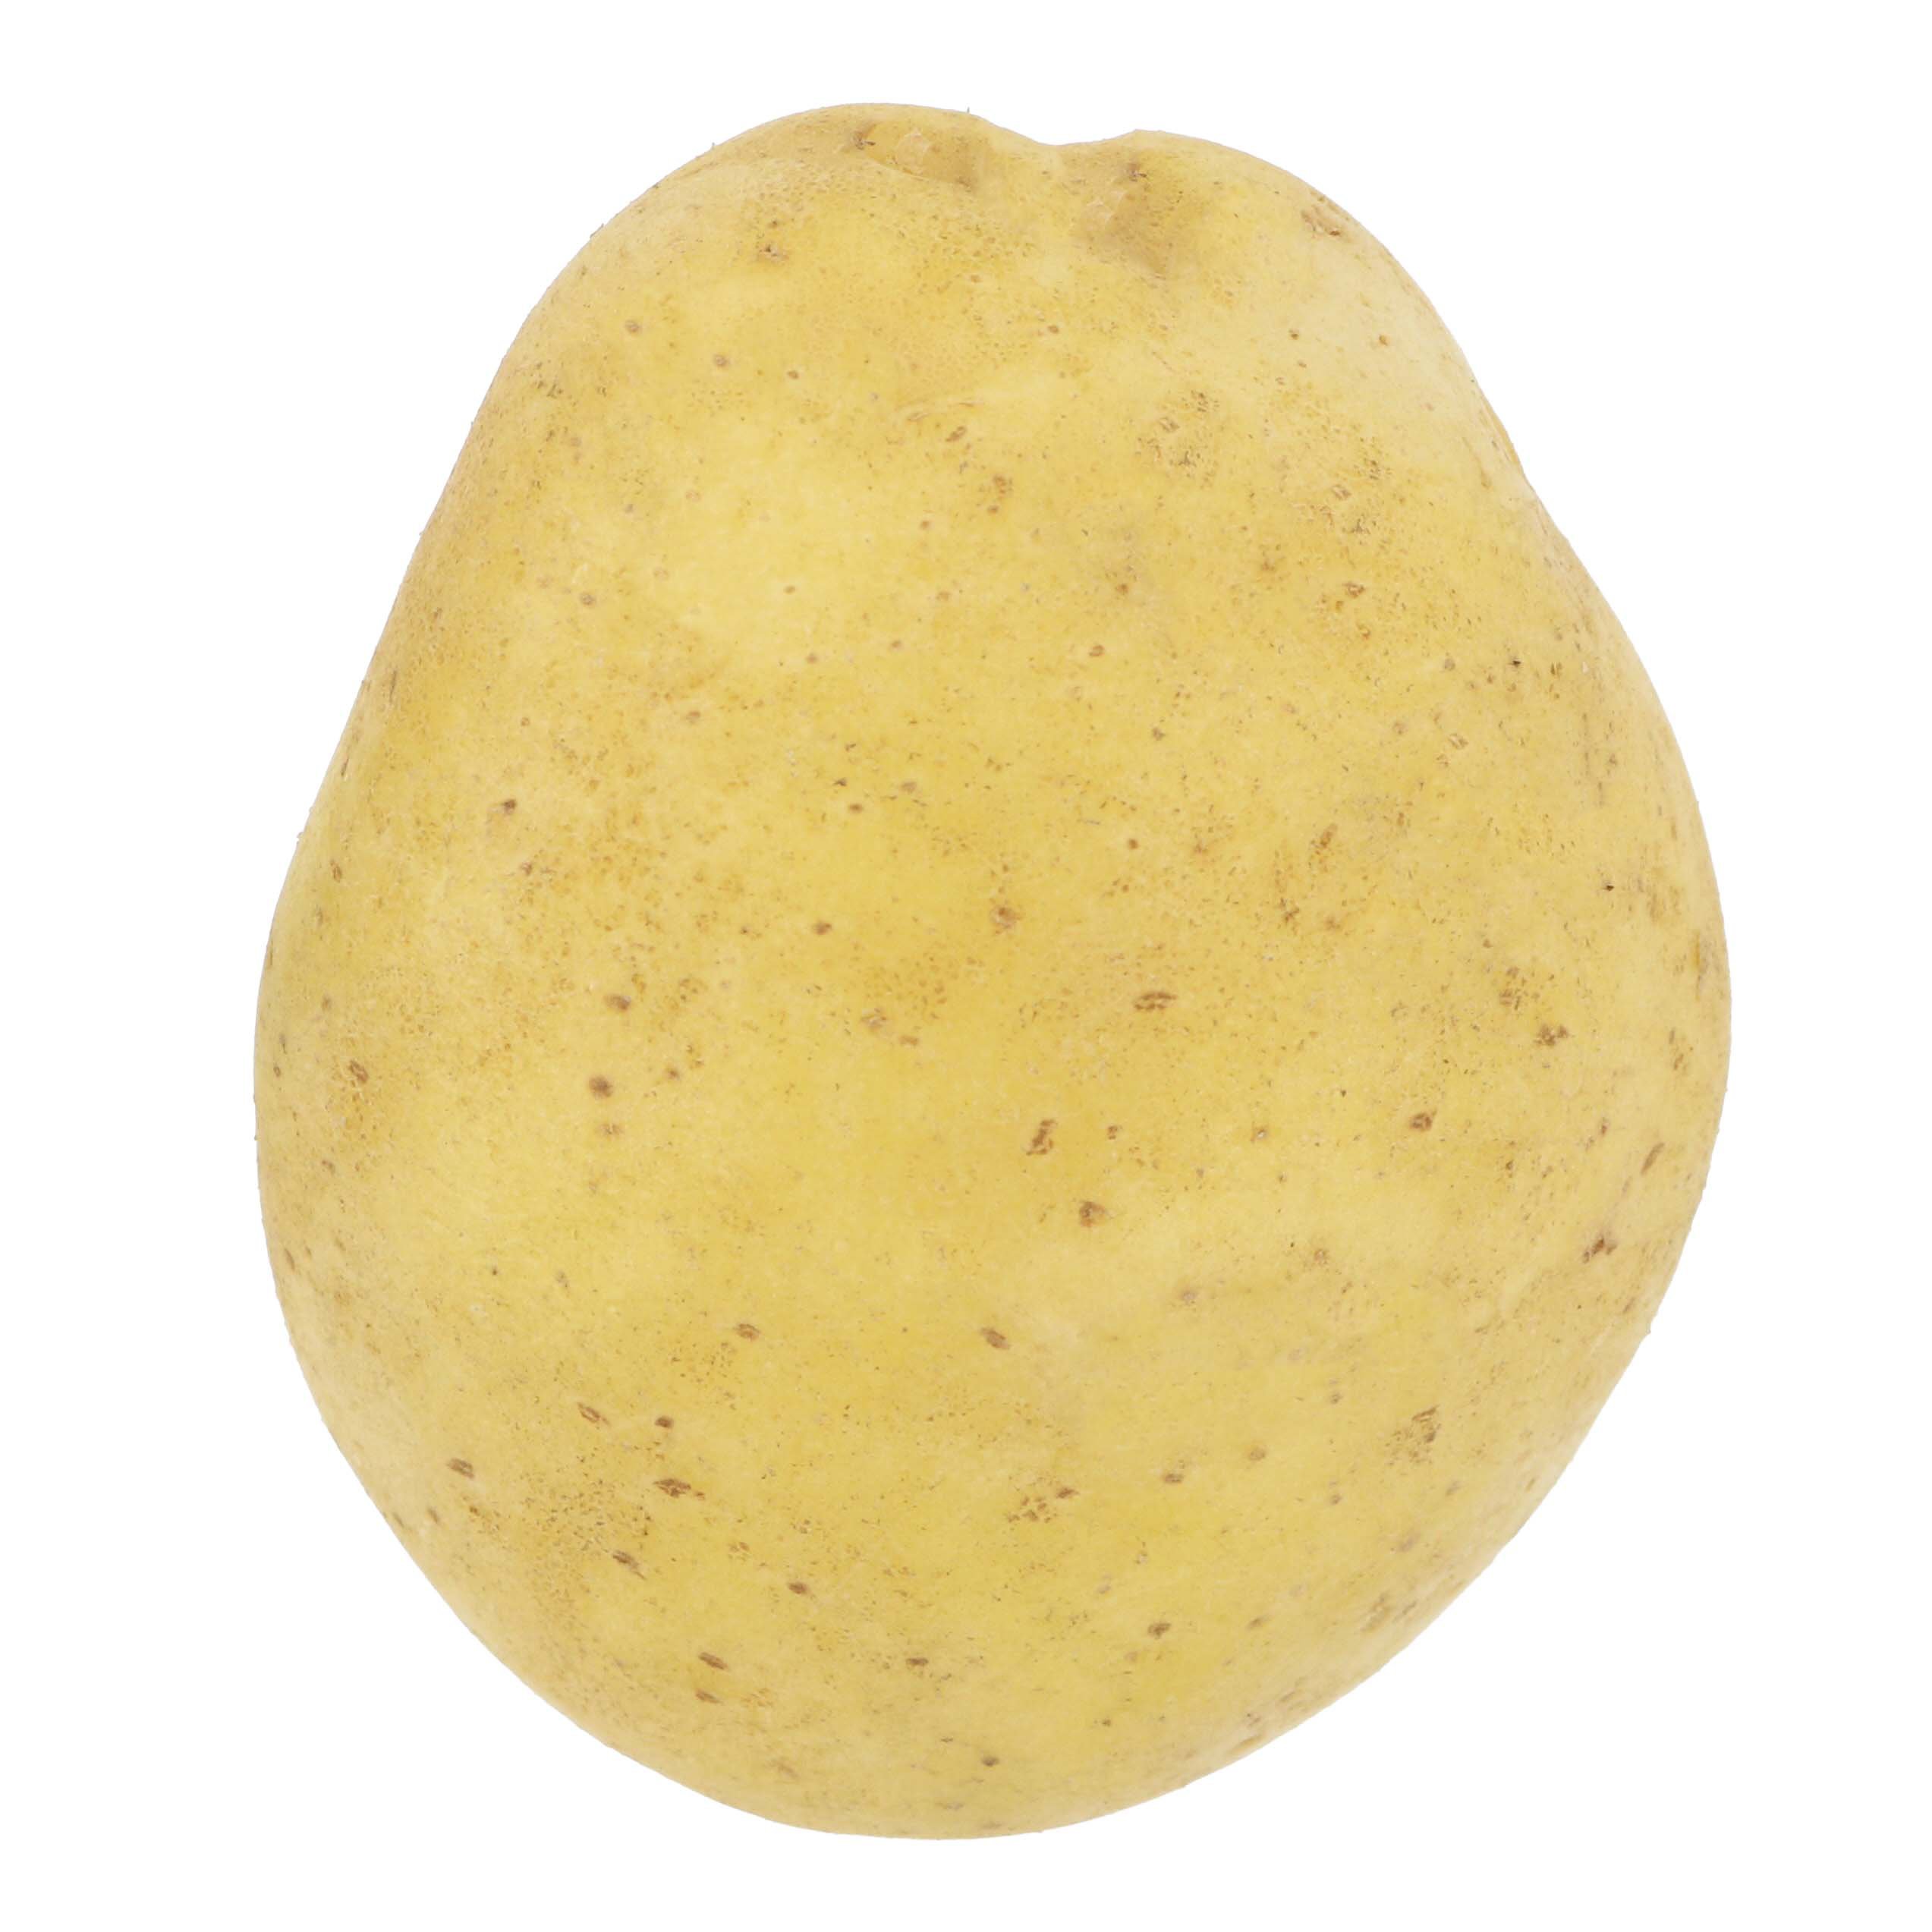 Fresh Organic White Potatoes